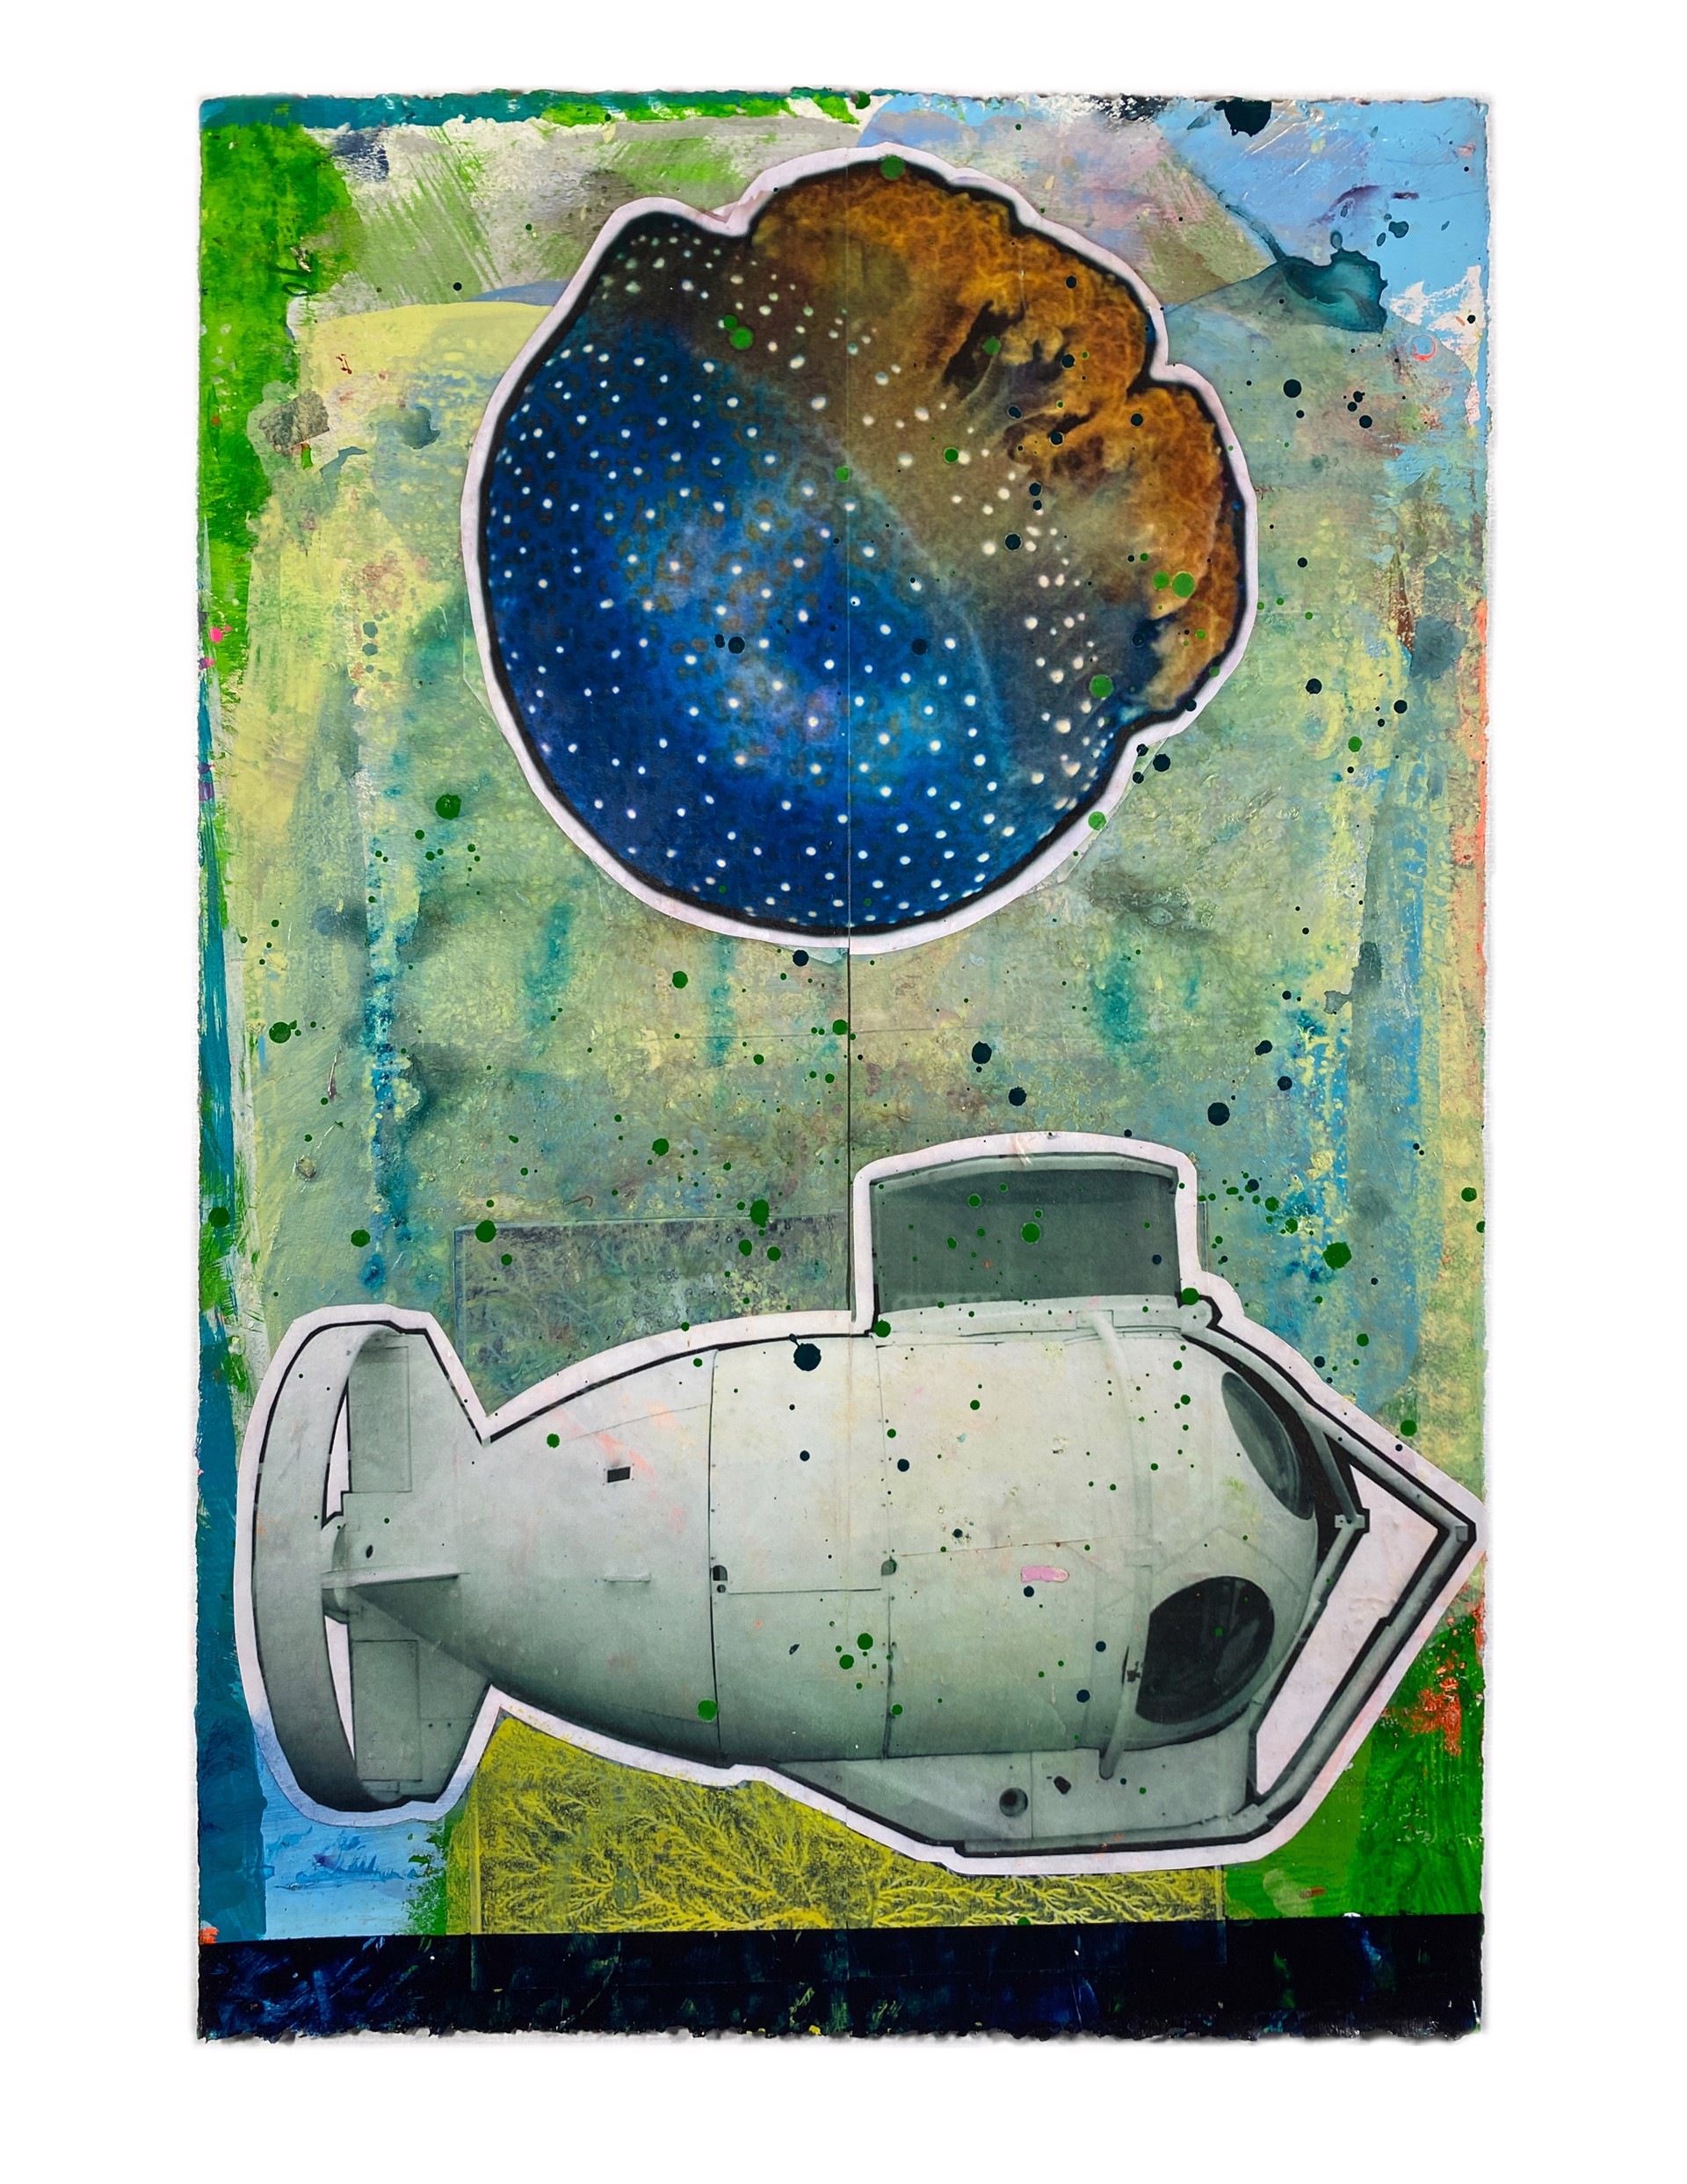 Cosmic Jelly Fish + Mini Sub by Jason Rohlf